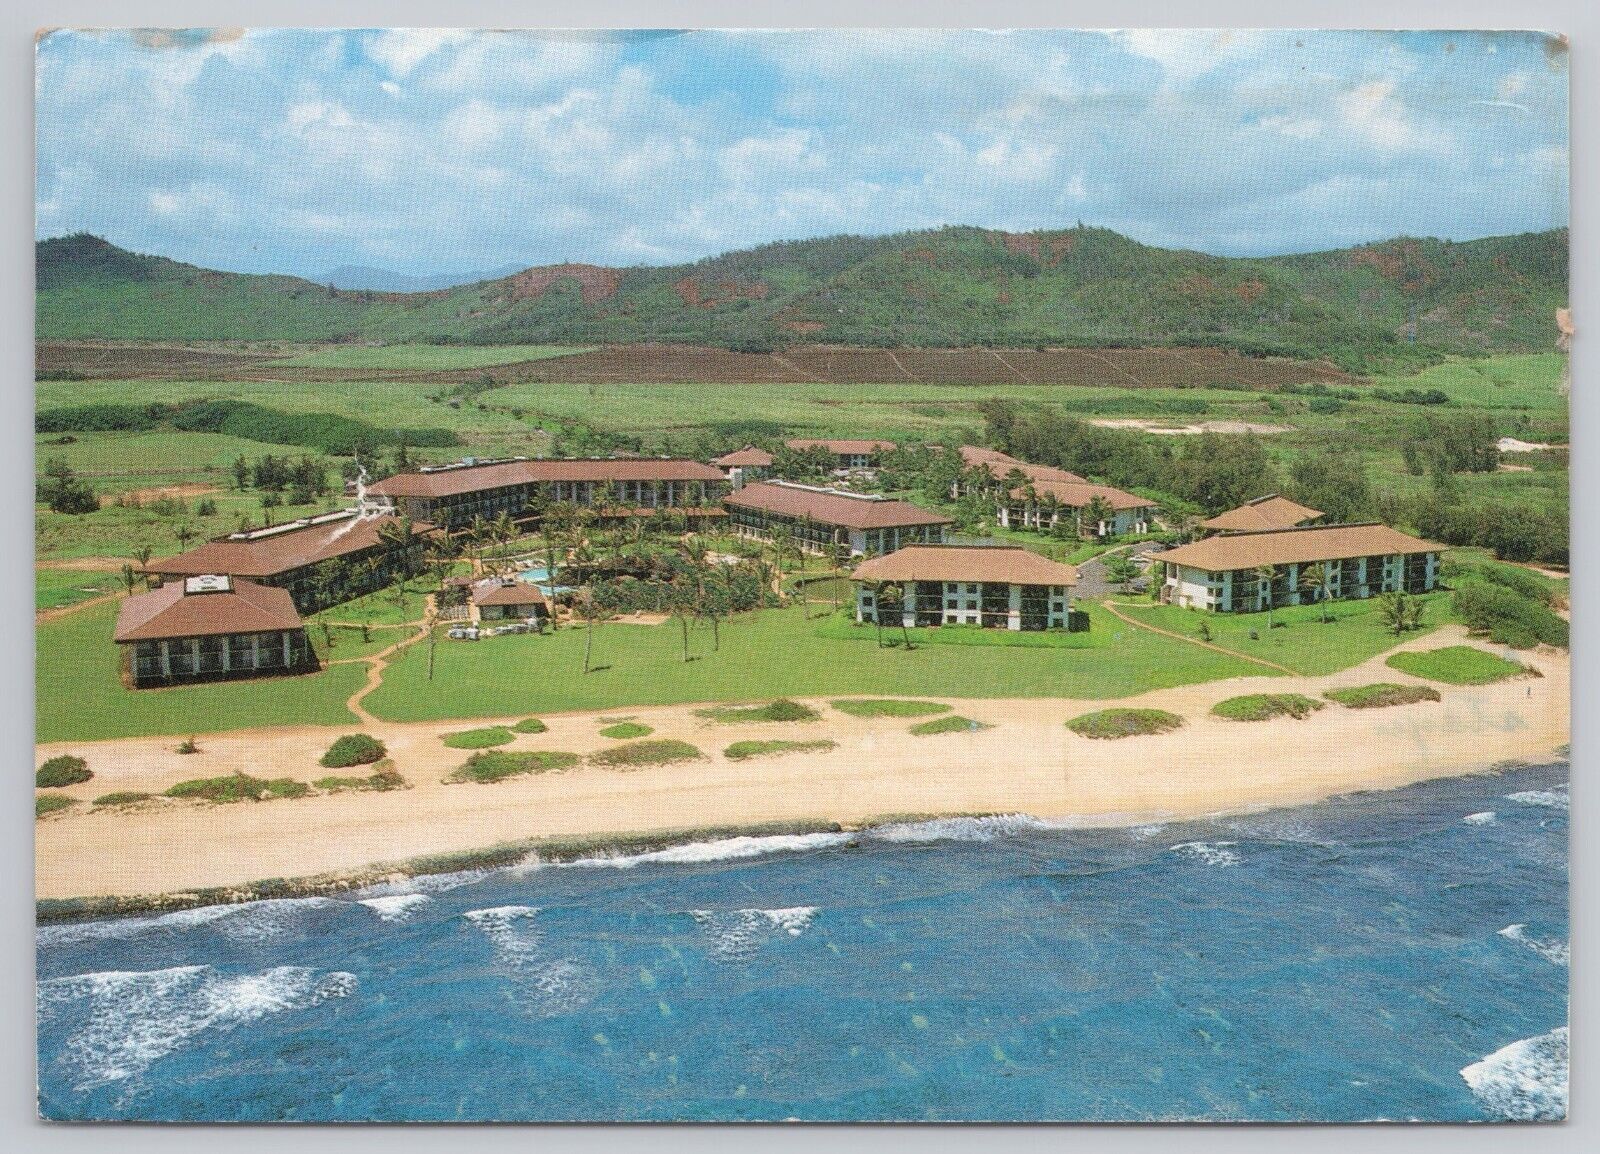 Kauai Hawaii, Hilton Hotel and Beach Villas, Hanamaulu Beach, Vintage Postcard